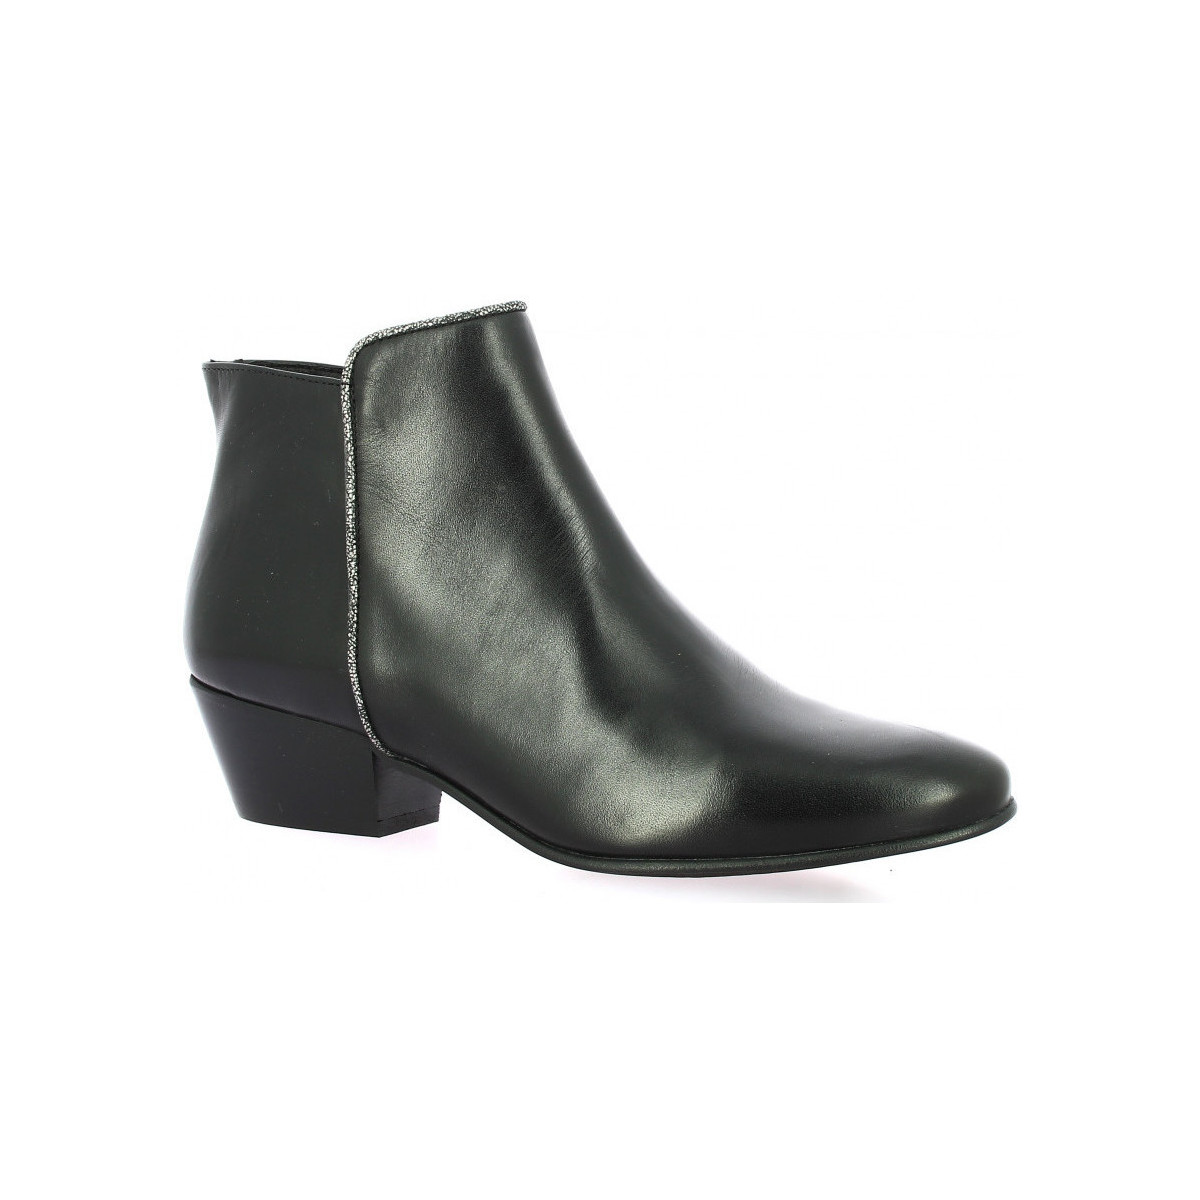 Chaussures Femme Boots Impact Boots cuir Noir